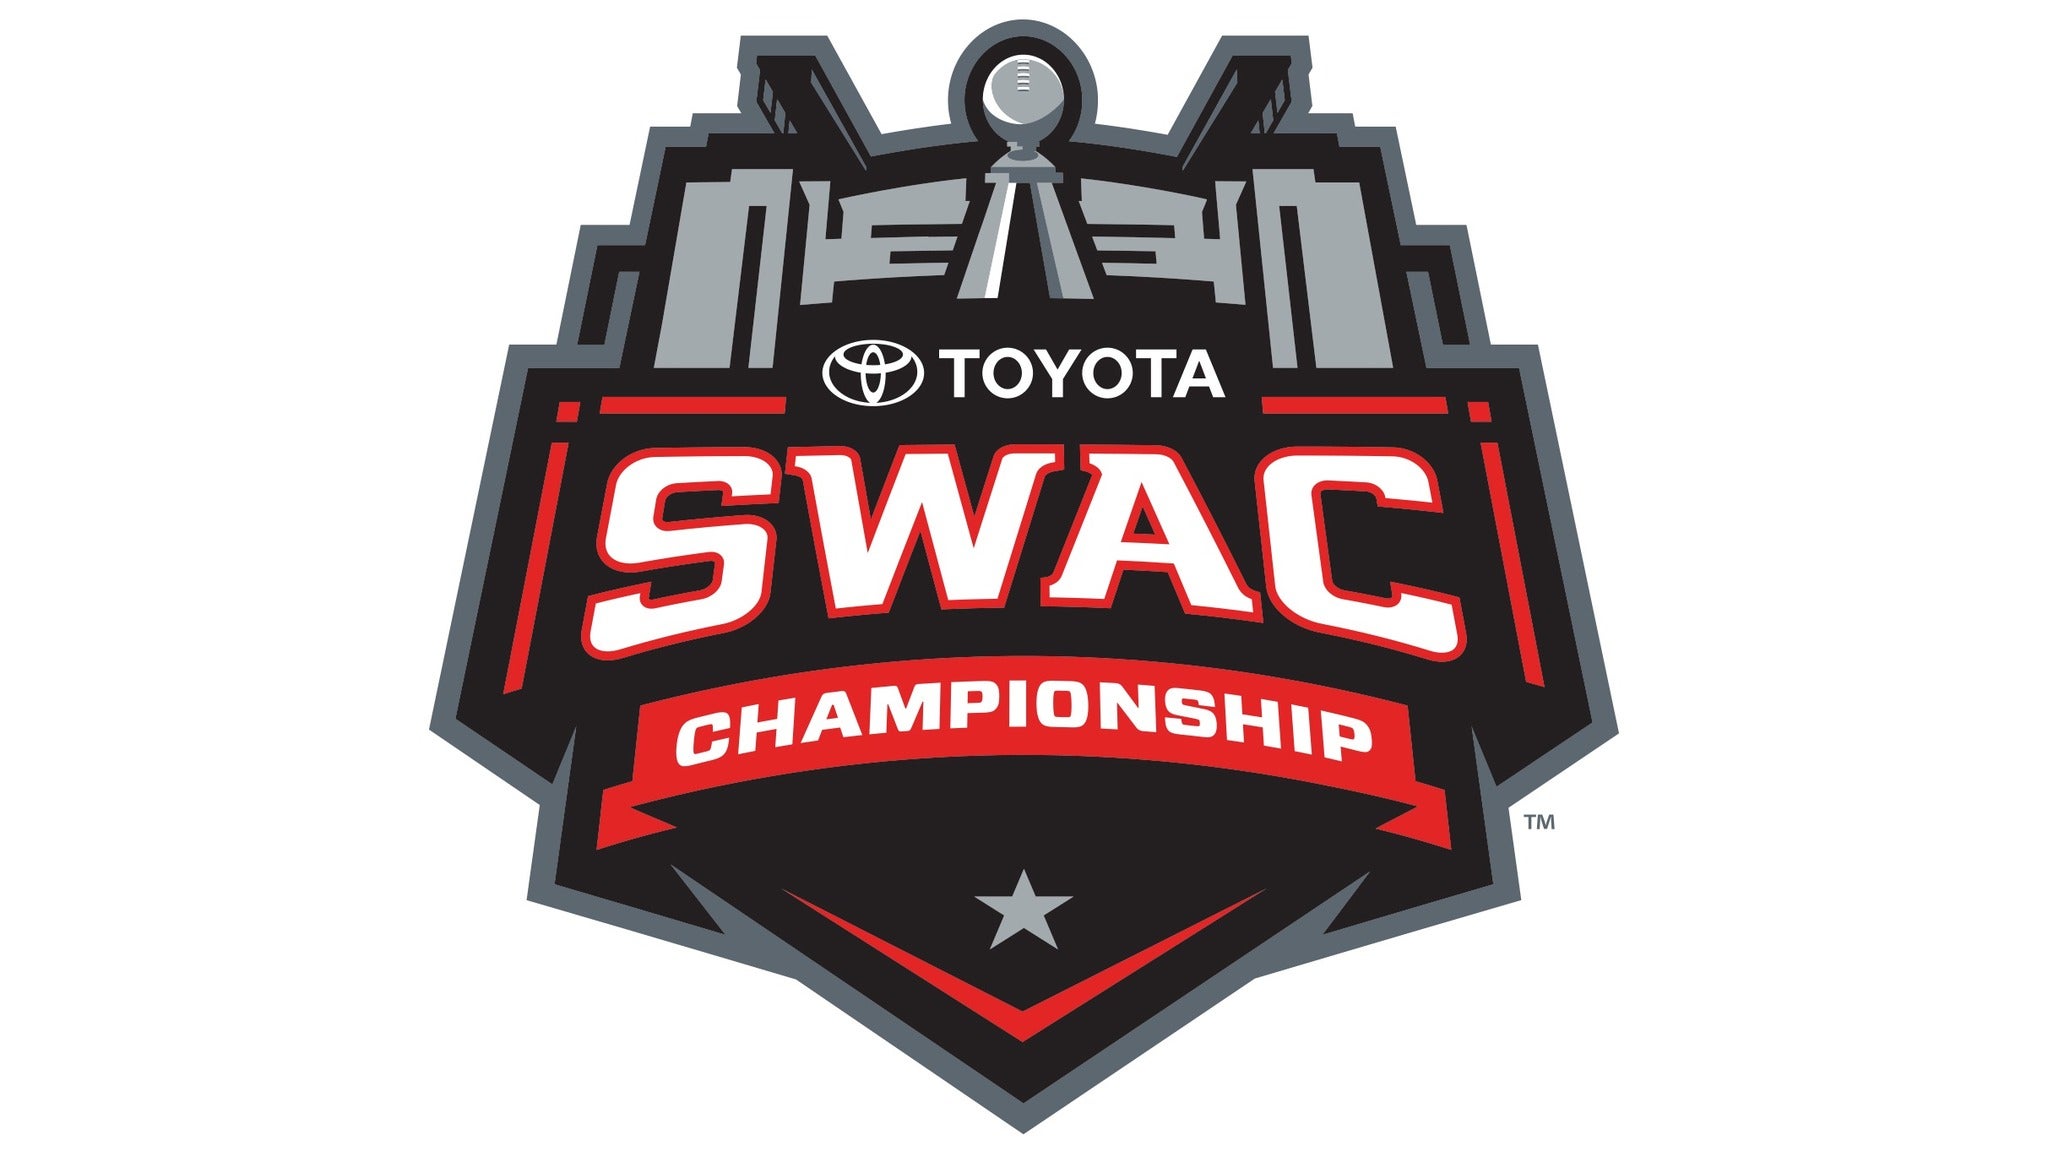 SWAC Championship presale information on freepresalepasswords.com